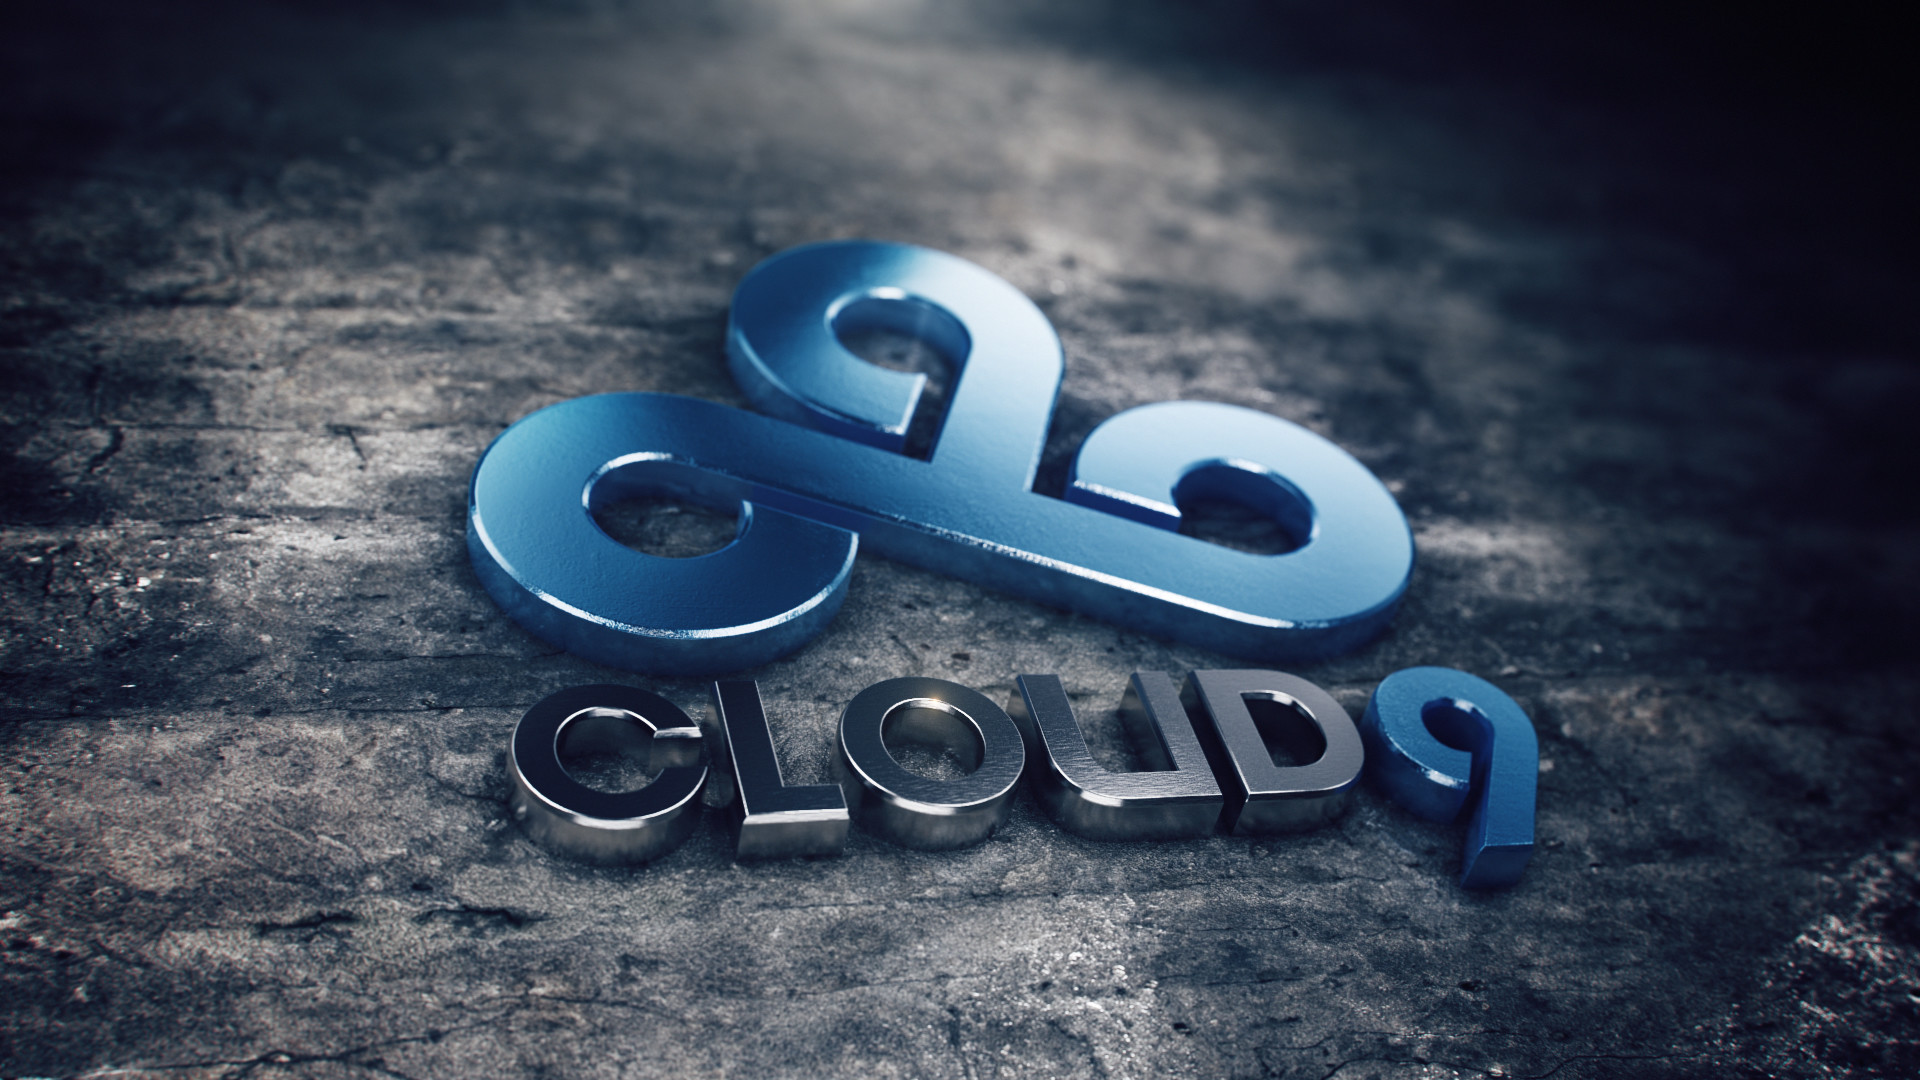 Cloud9 logo 3d